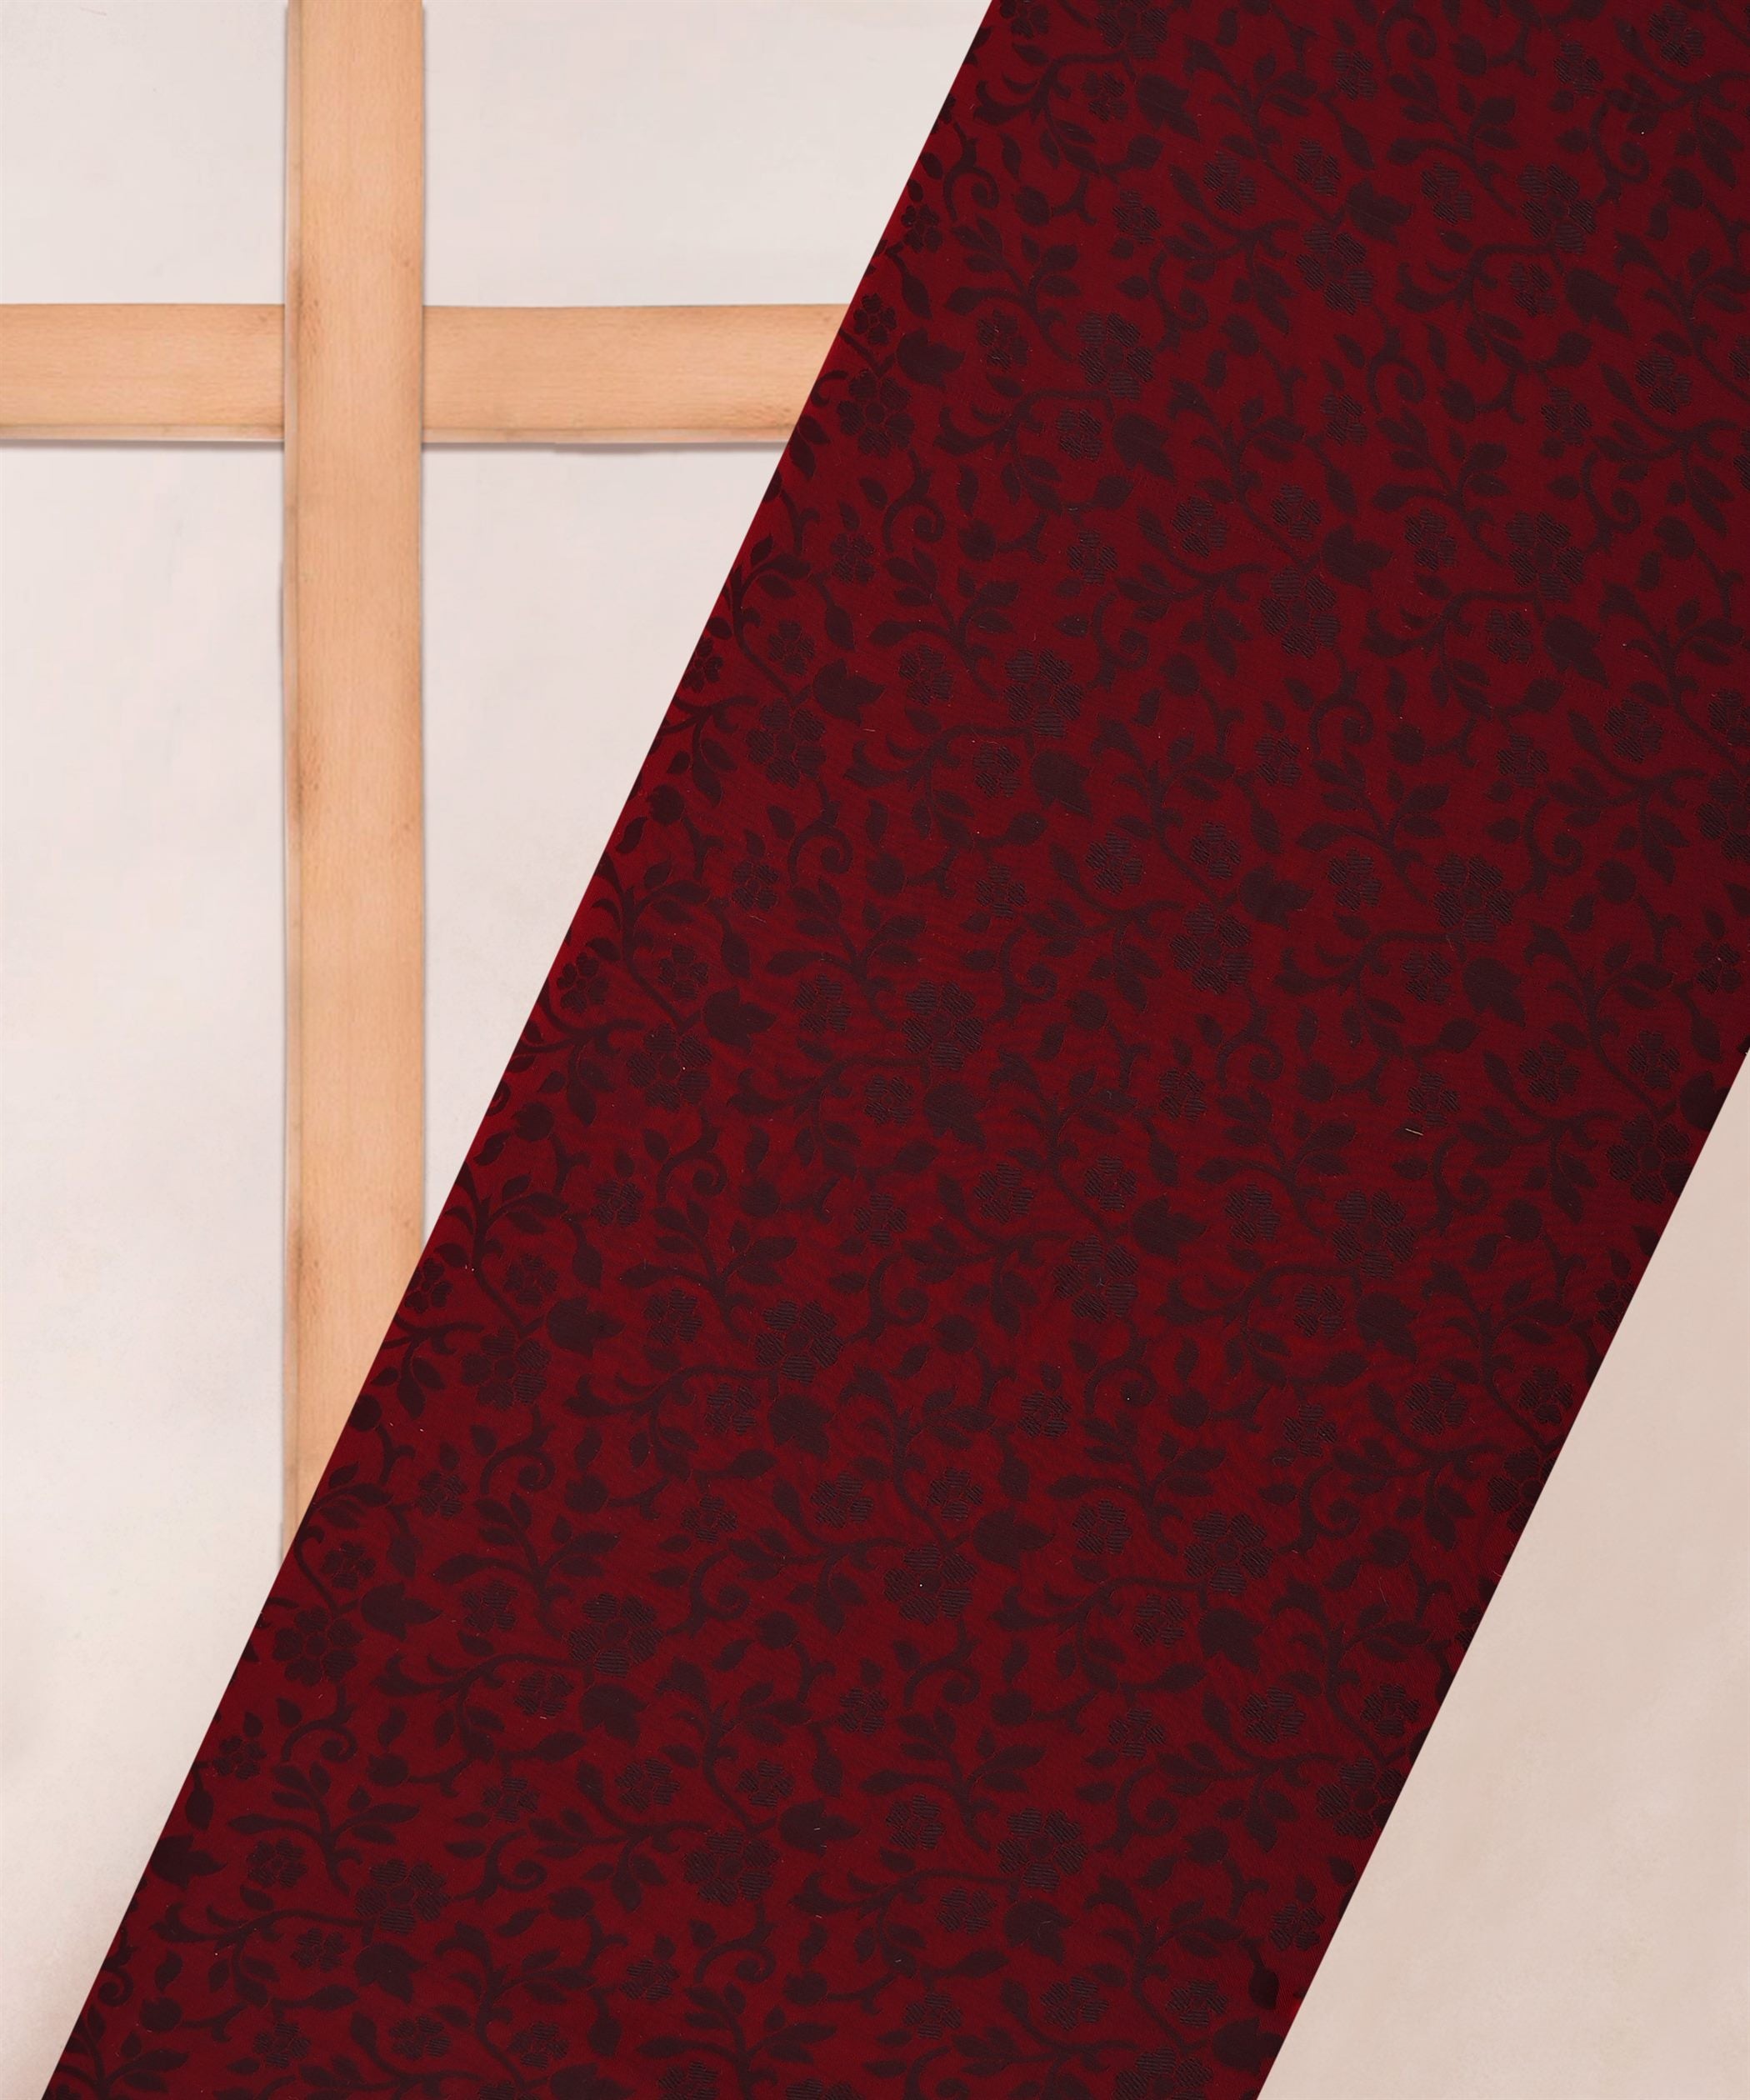 Red Satin Chiffon Fabric with Self Jacquard